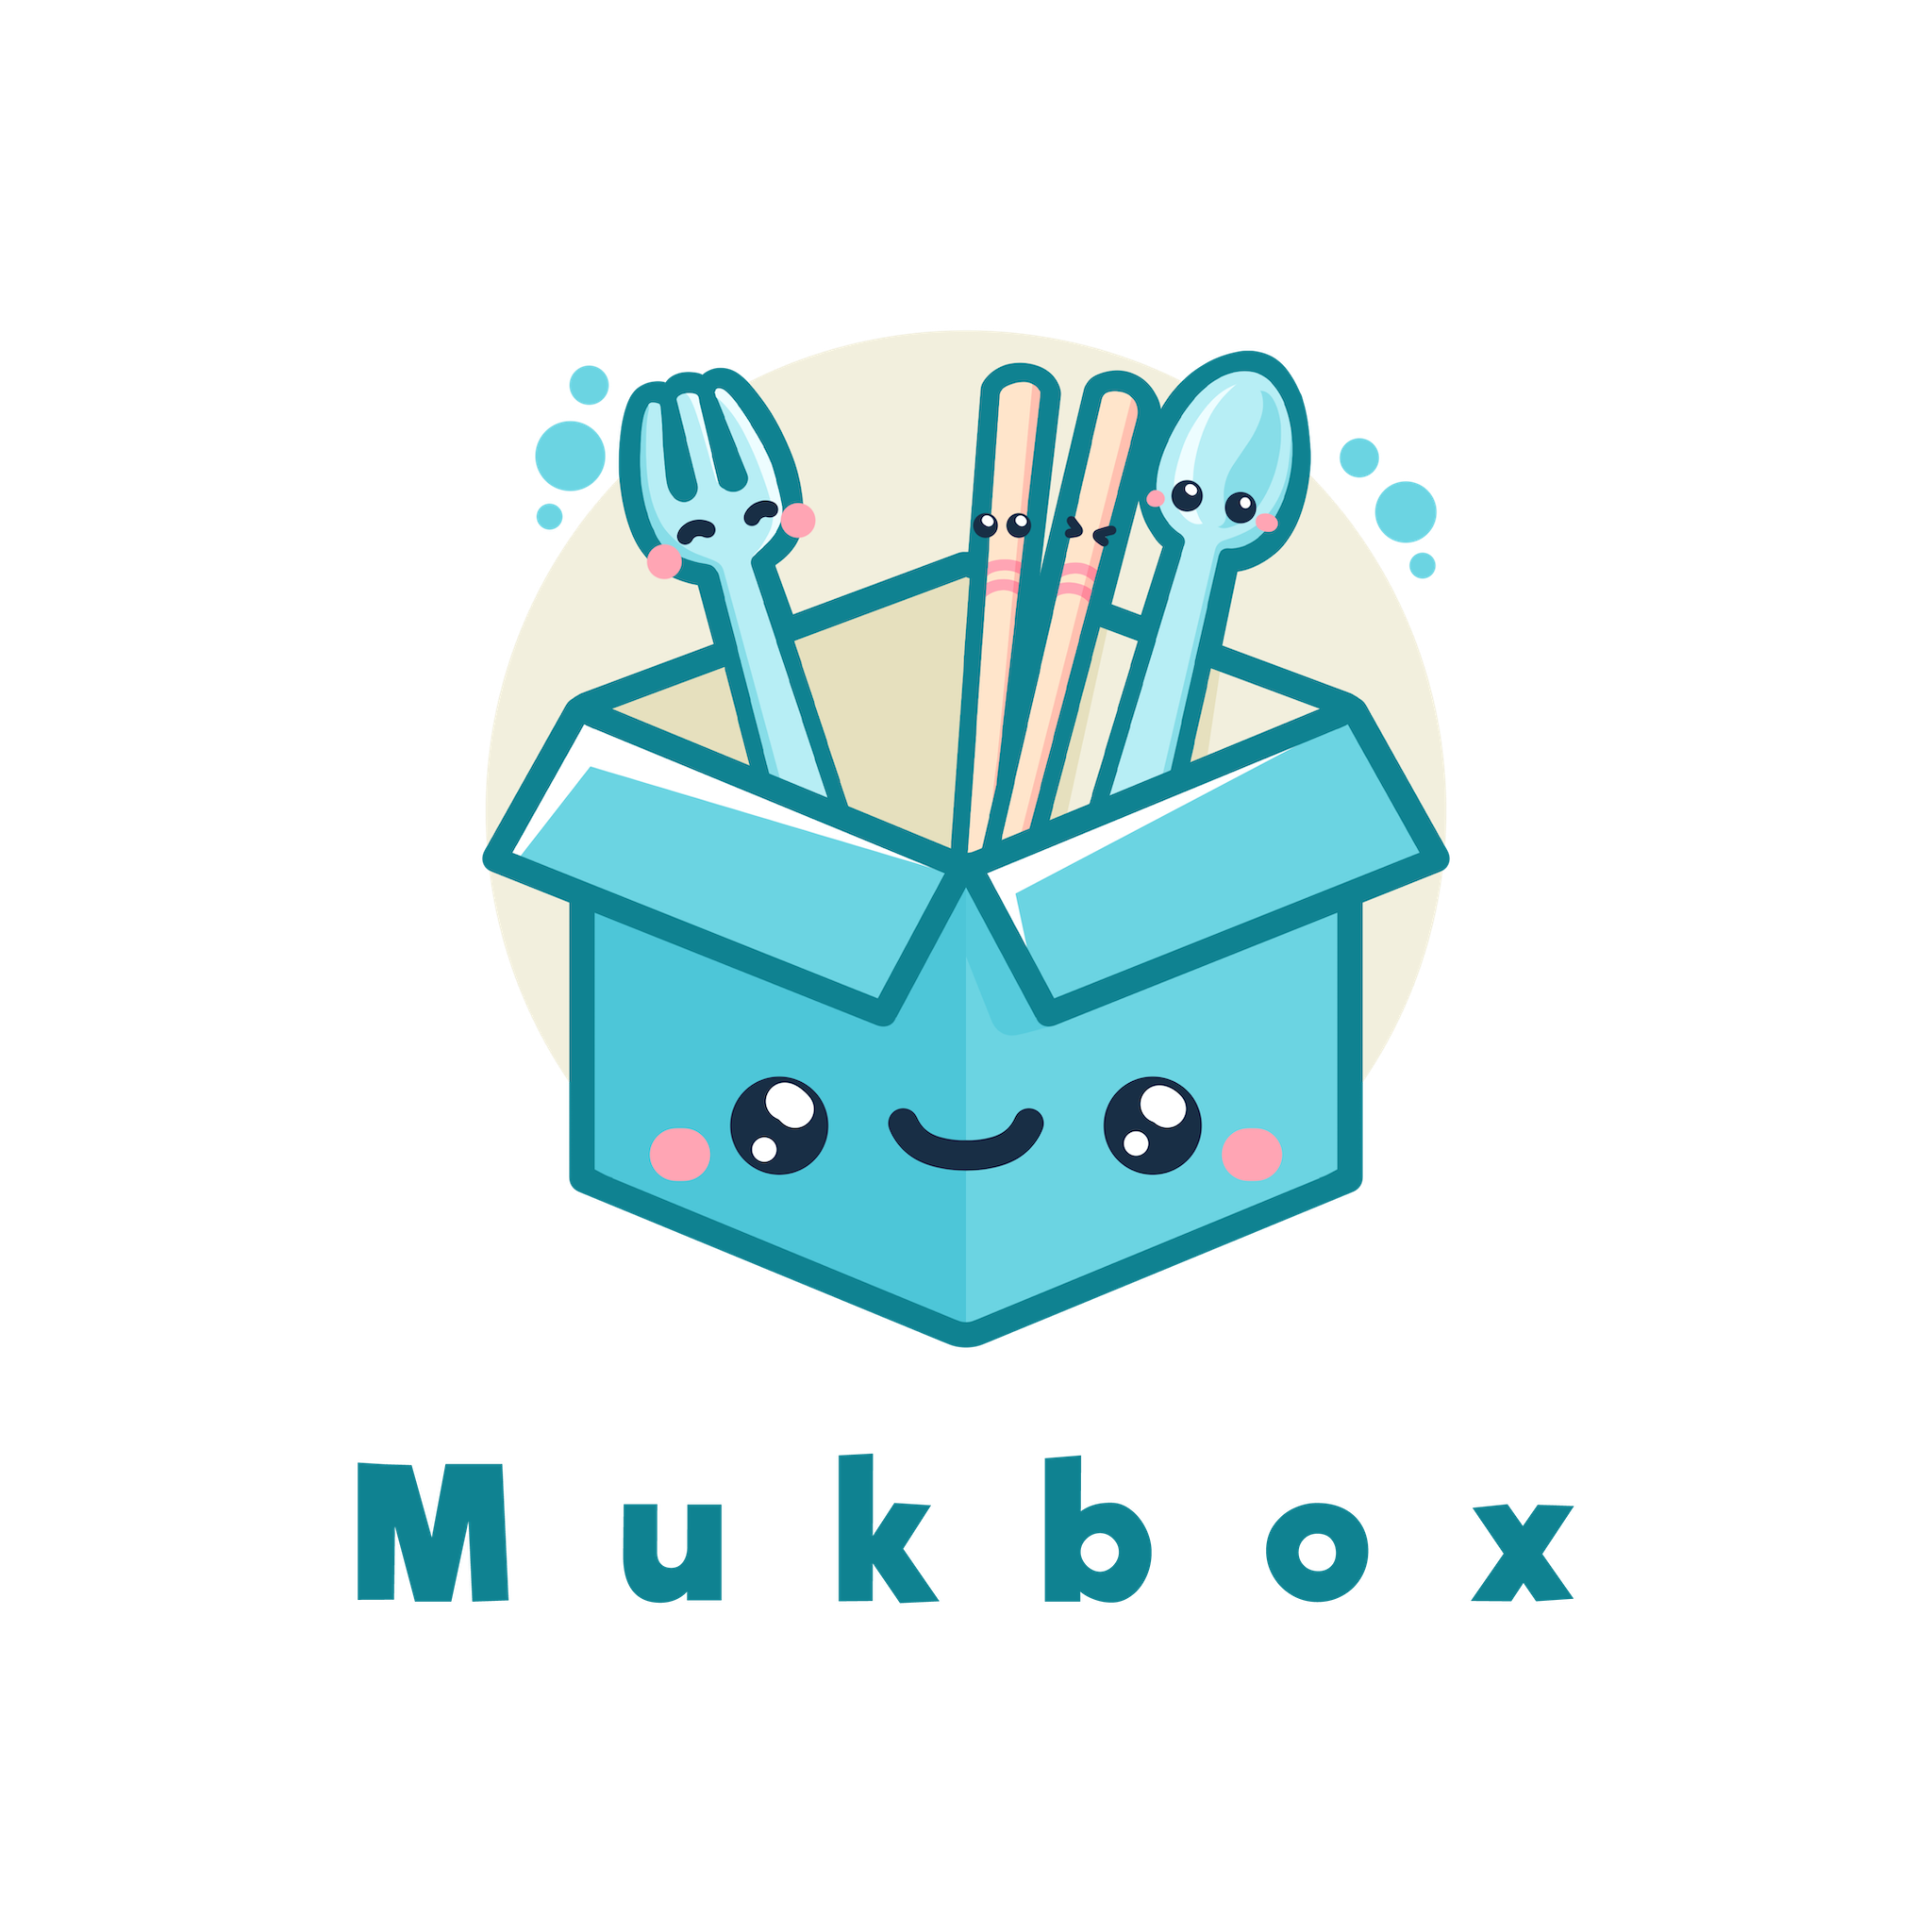 Mukbox logo, smiling blue box with smiling utensils inside.